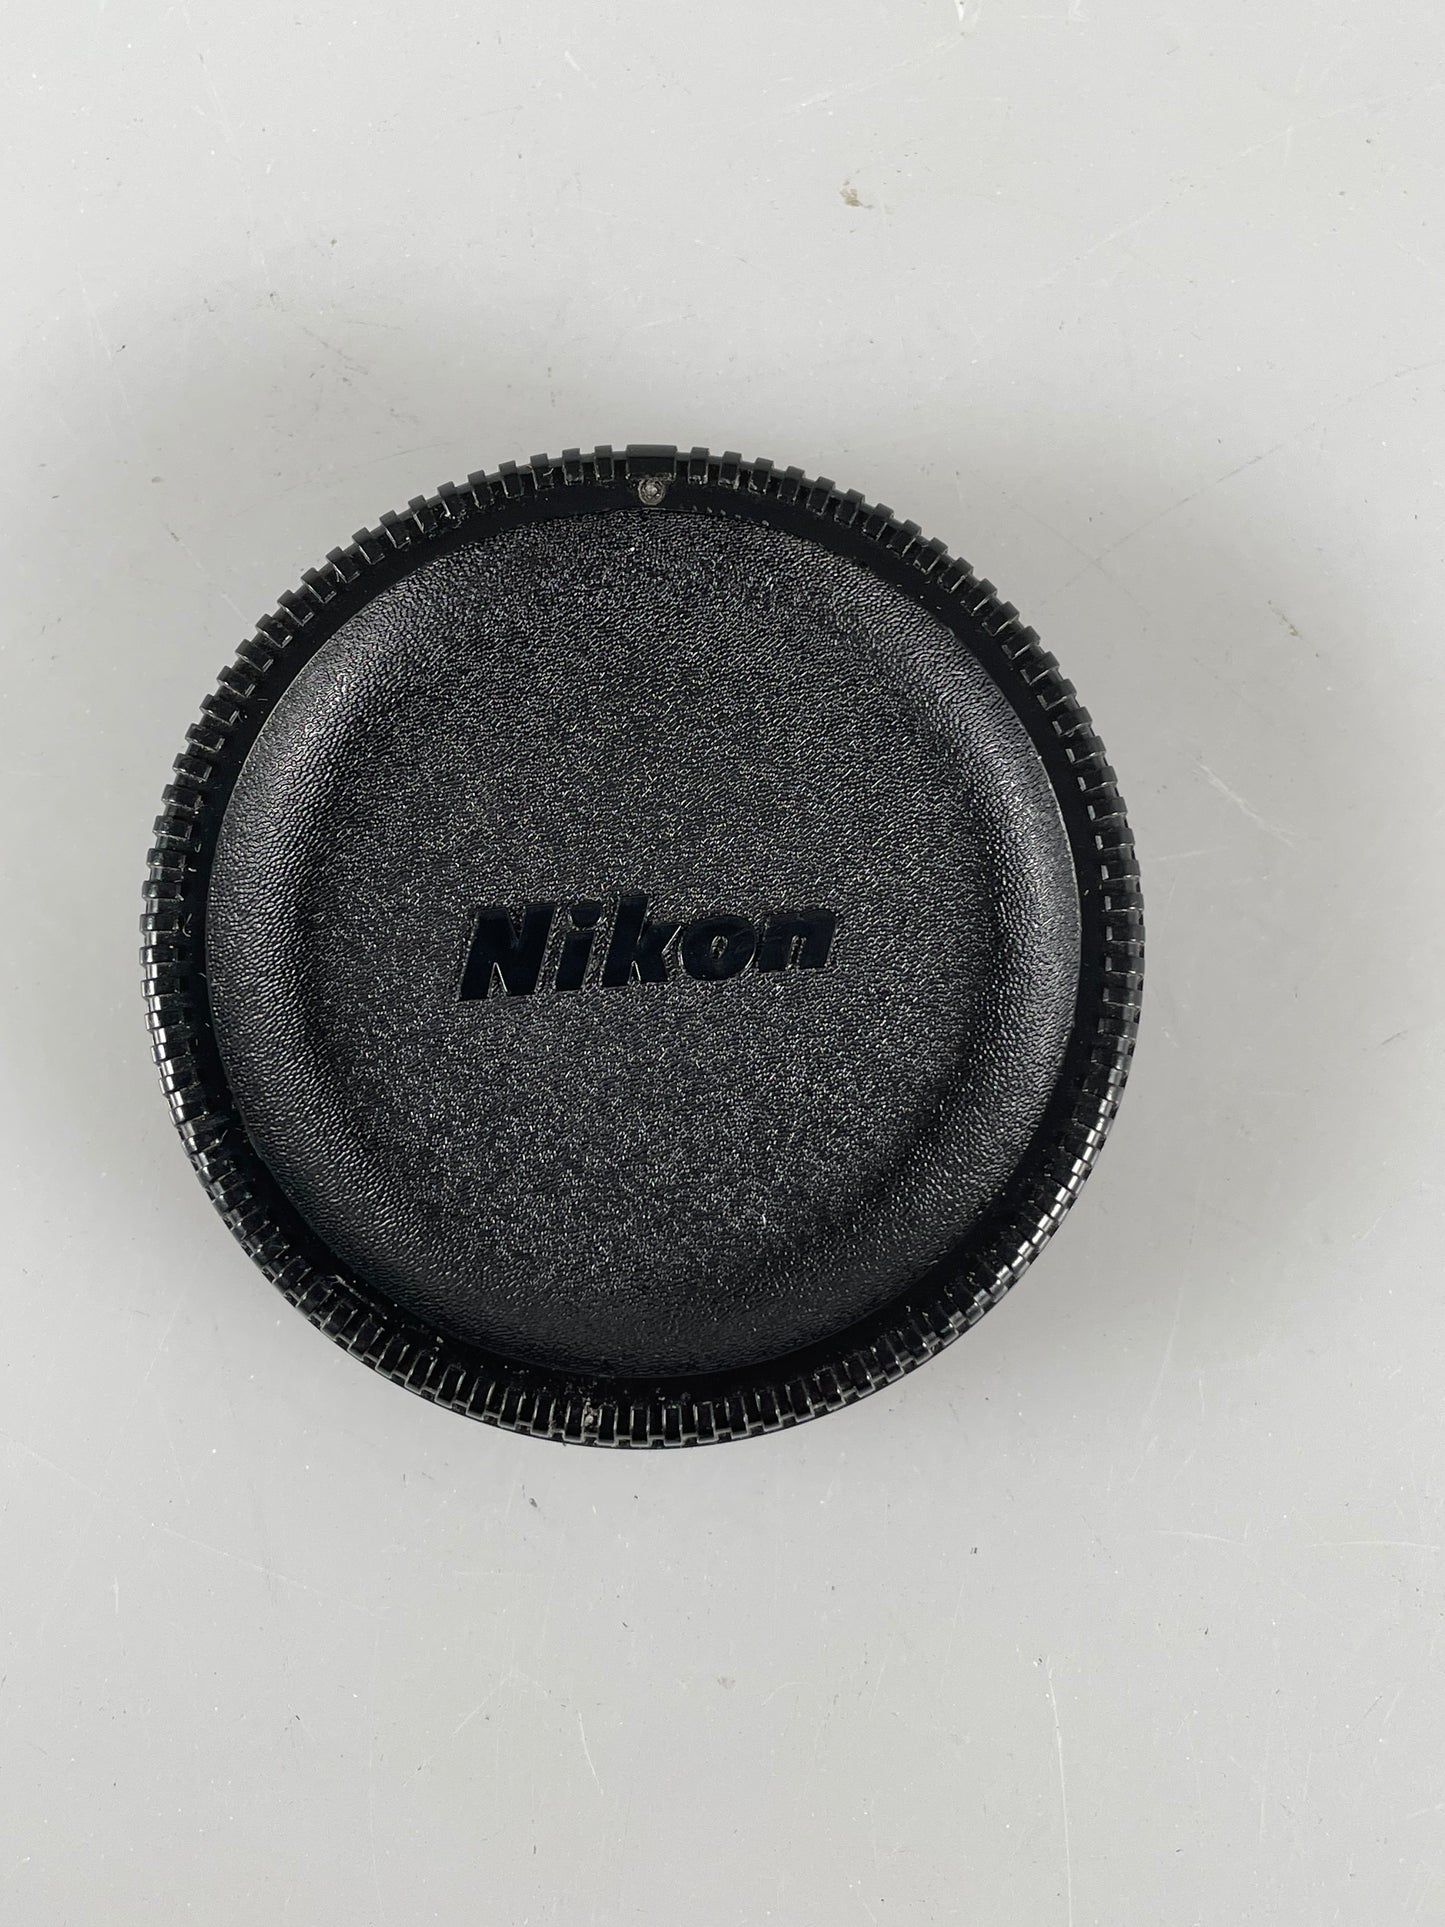 Nikon F Film Camera Body Cap